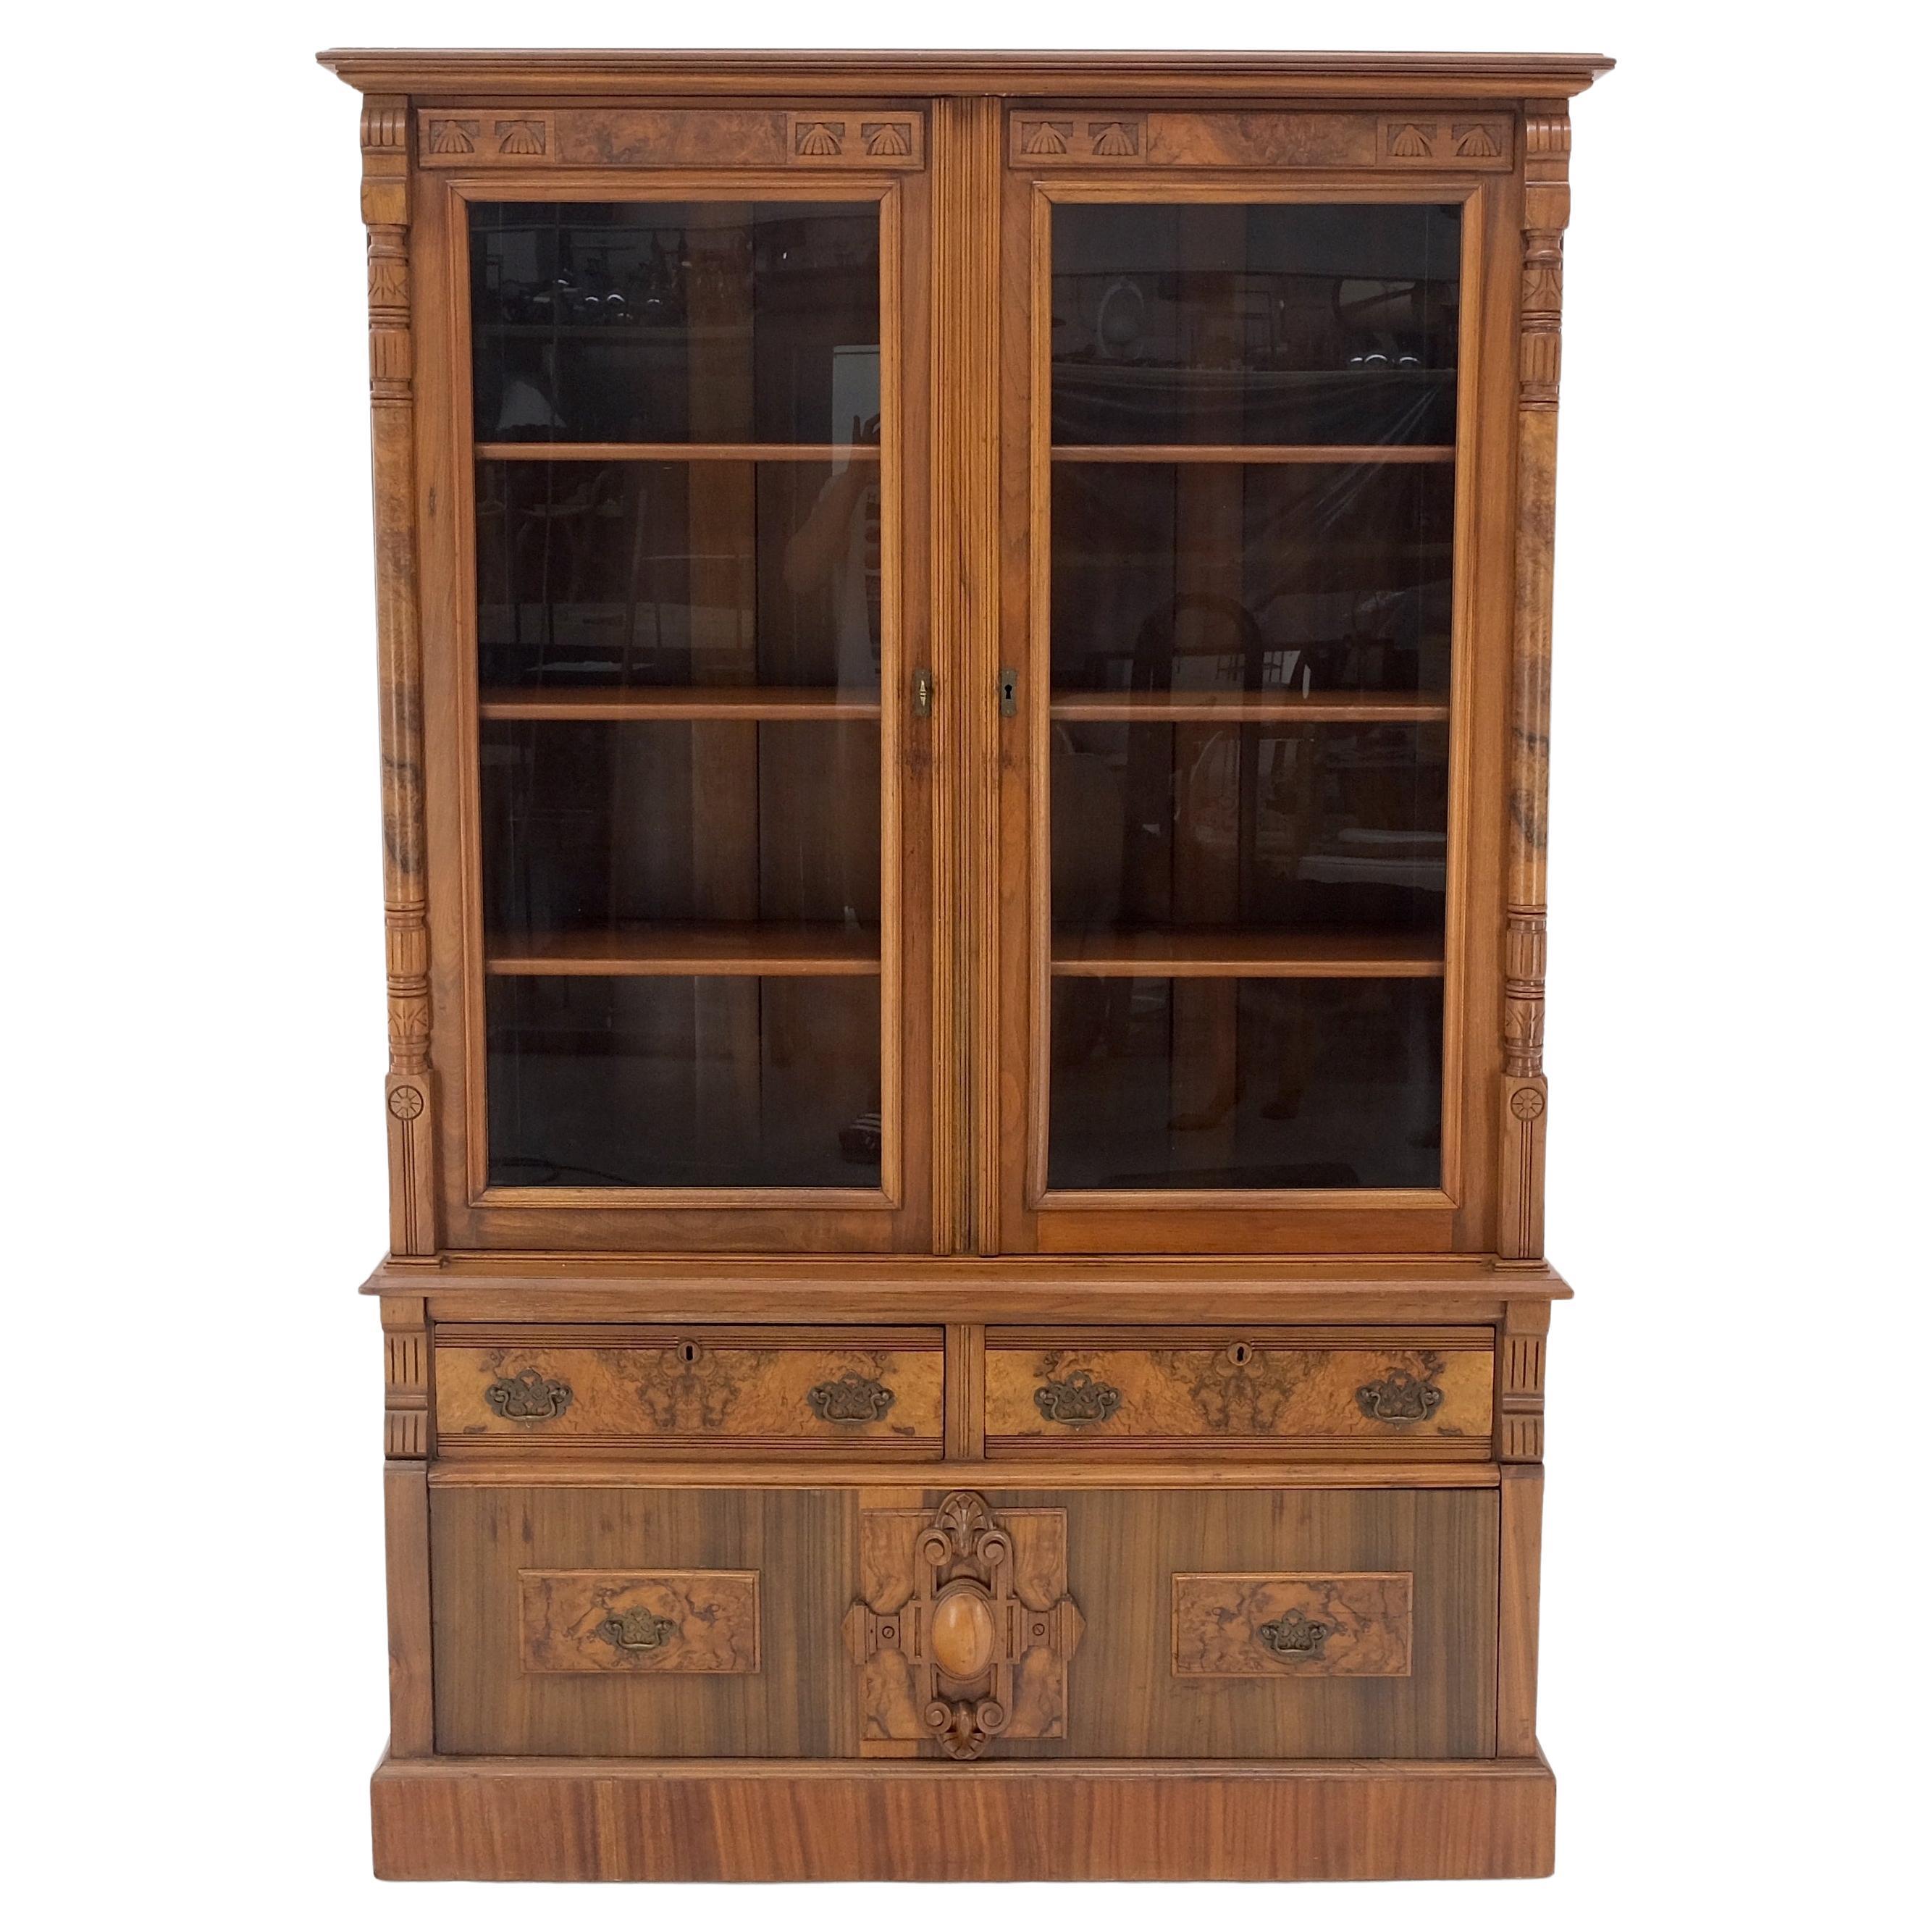 Burl walnut adjustable shelves two doors one drawer antique bookcase cabinet.